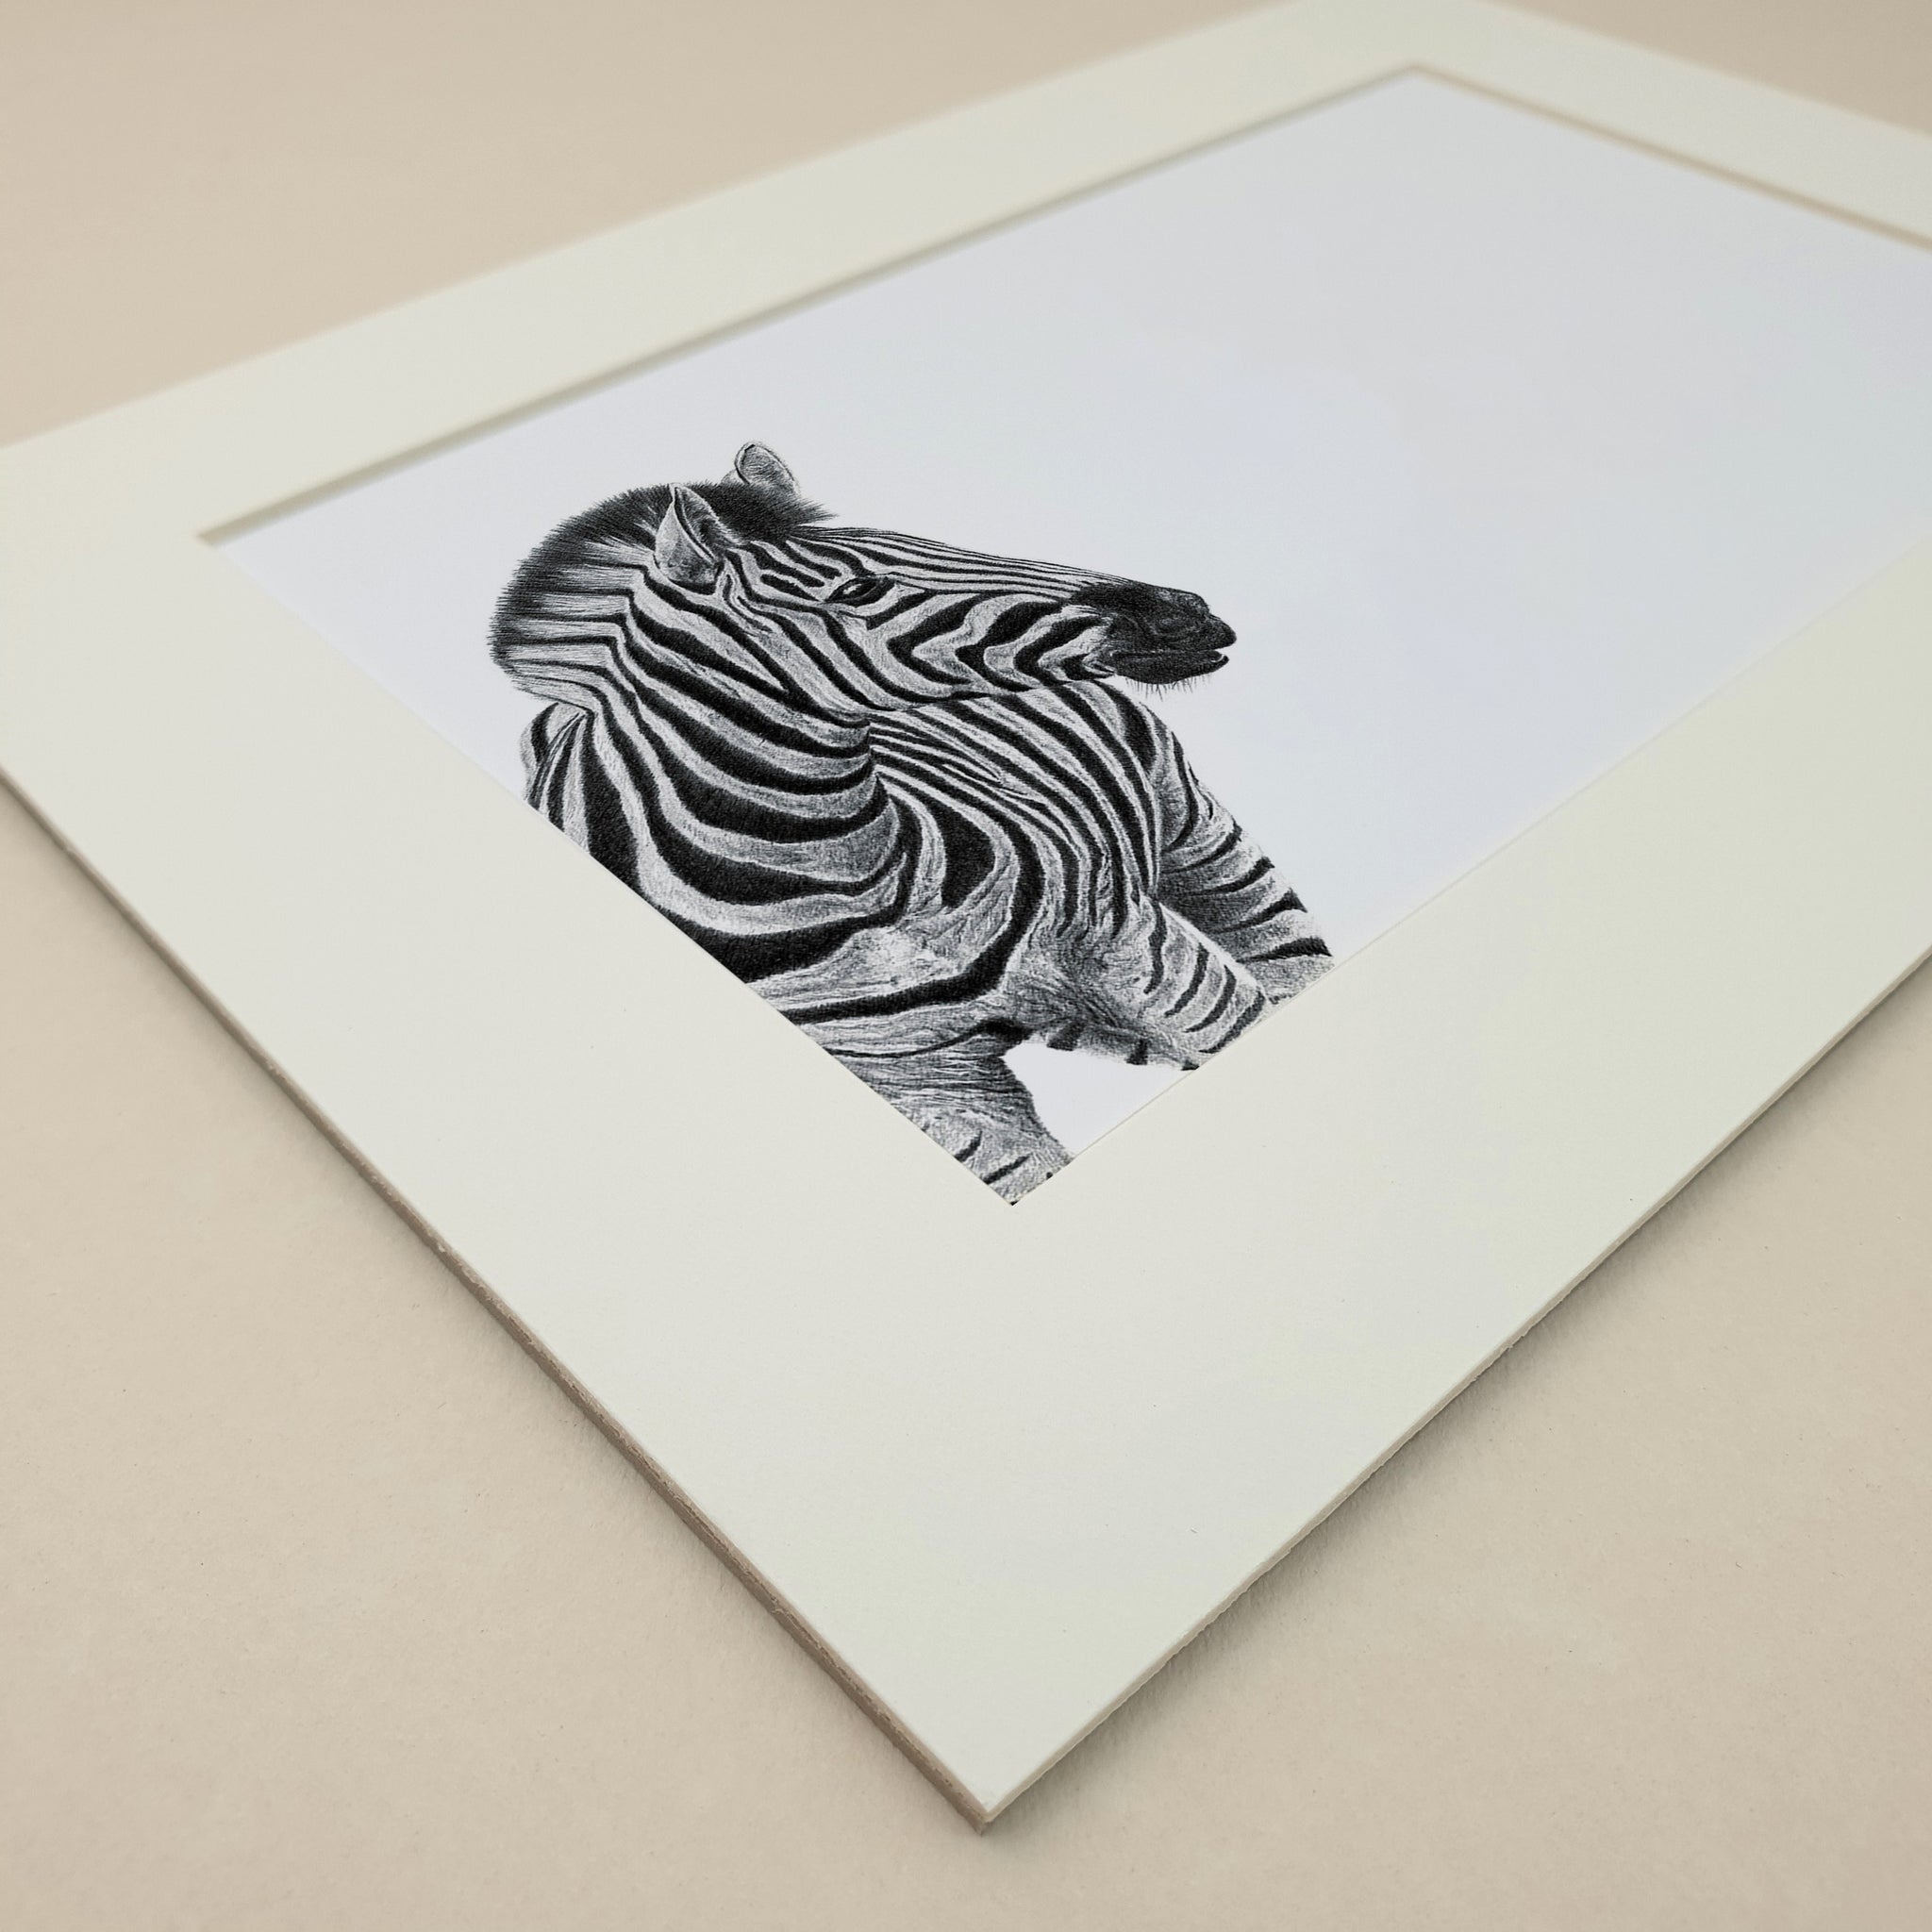 Zebra portrait artwork